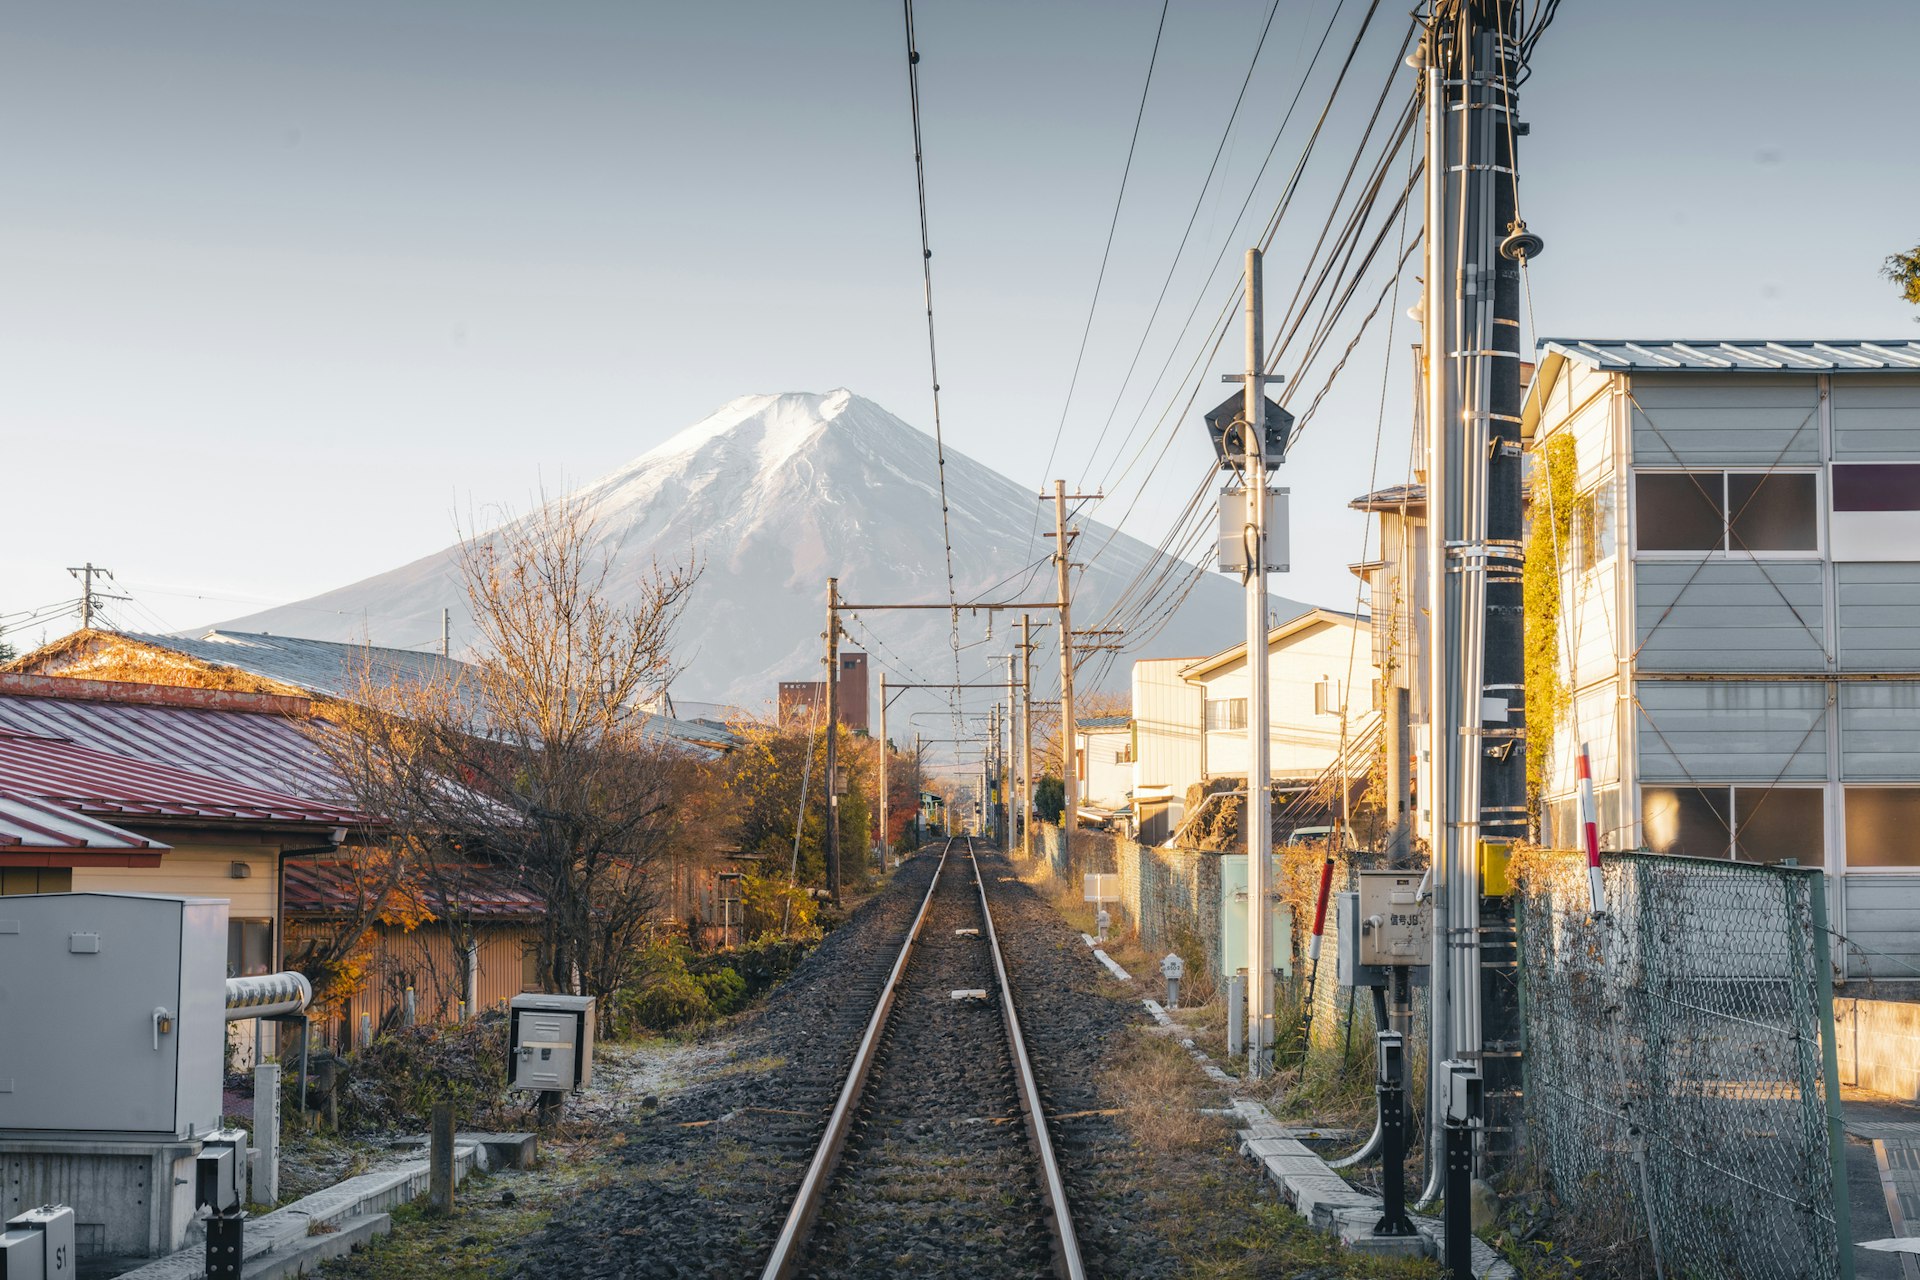 A single-track train line heading towards the iconic shape of Mount Fuji